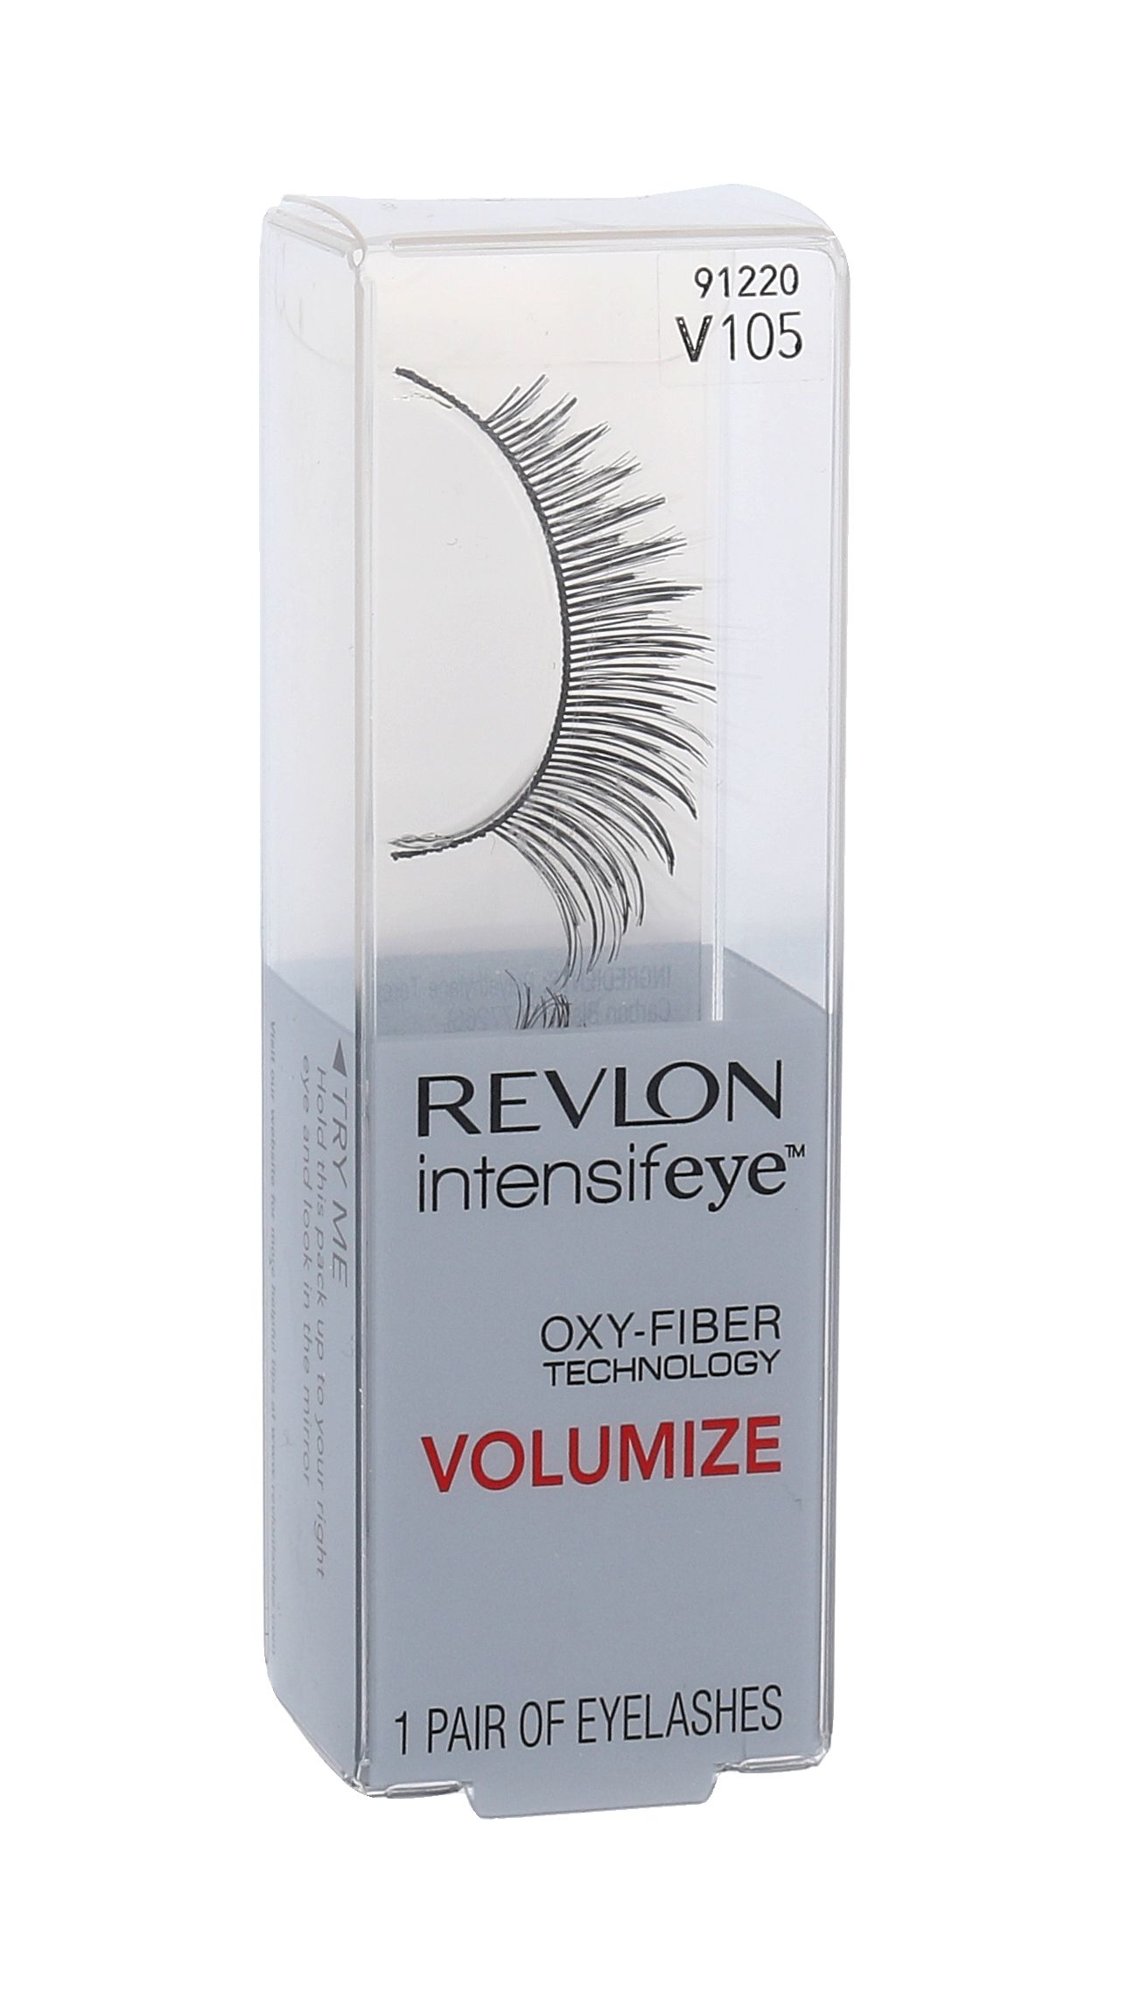 Revlon Volumize Intensifeye Oxy-Fiber Technology dirbtinės blakstienos